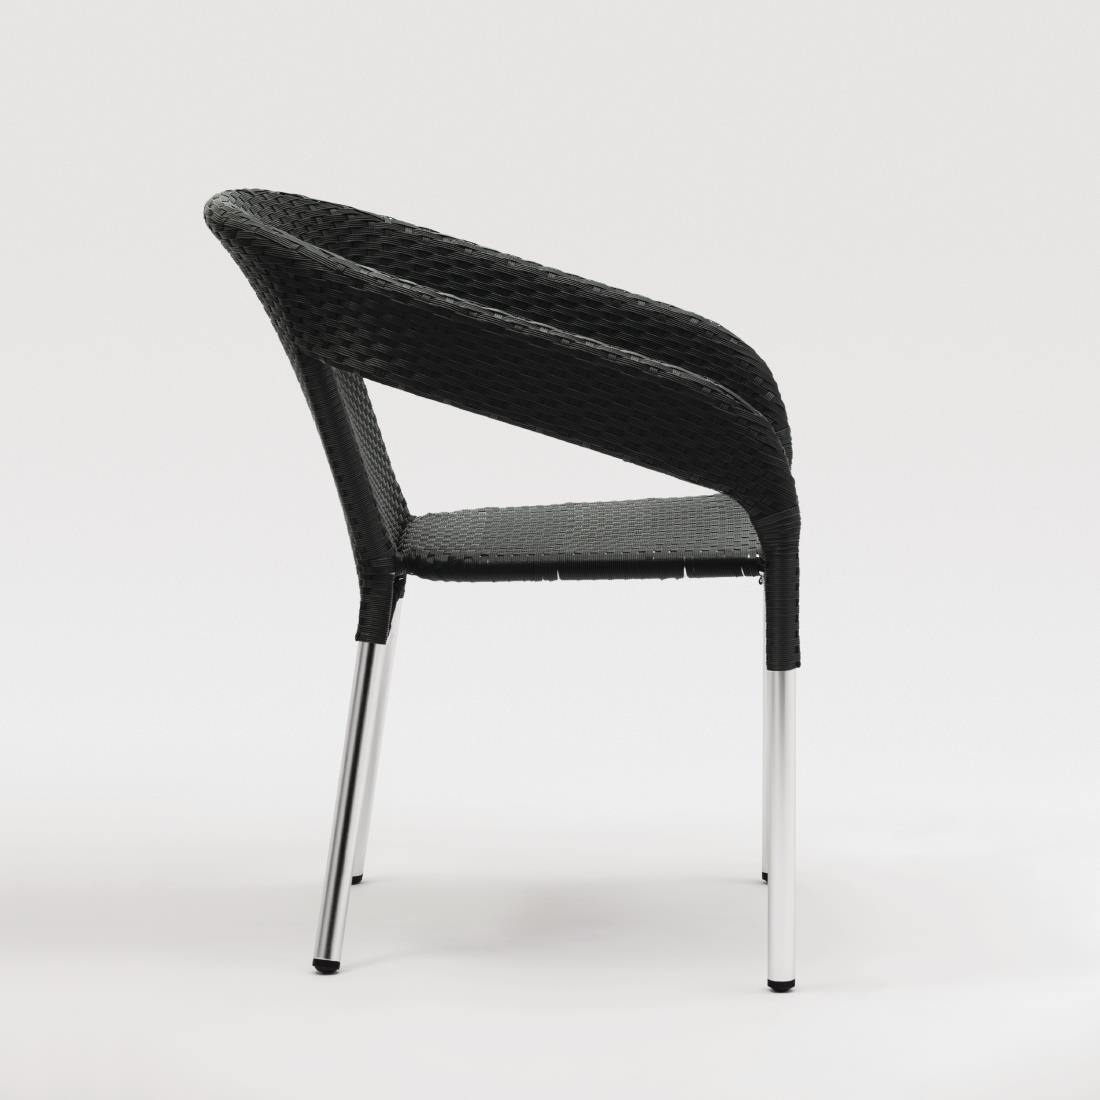 Bolero Wicker Wraparound Bistro Chairs Charcoal (Pack of 4) - CG223  - 5